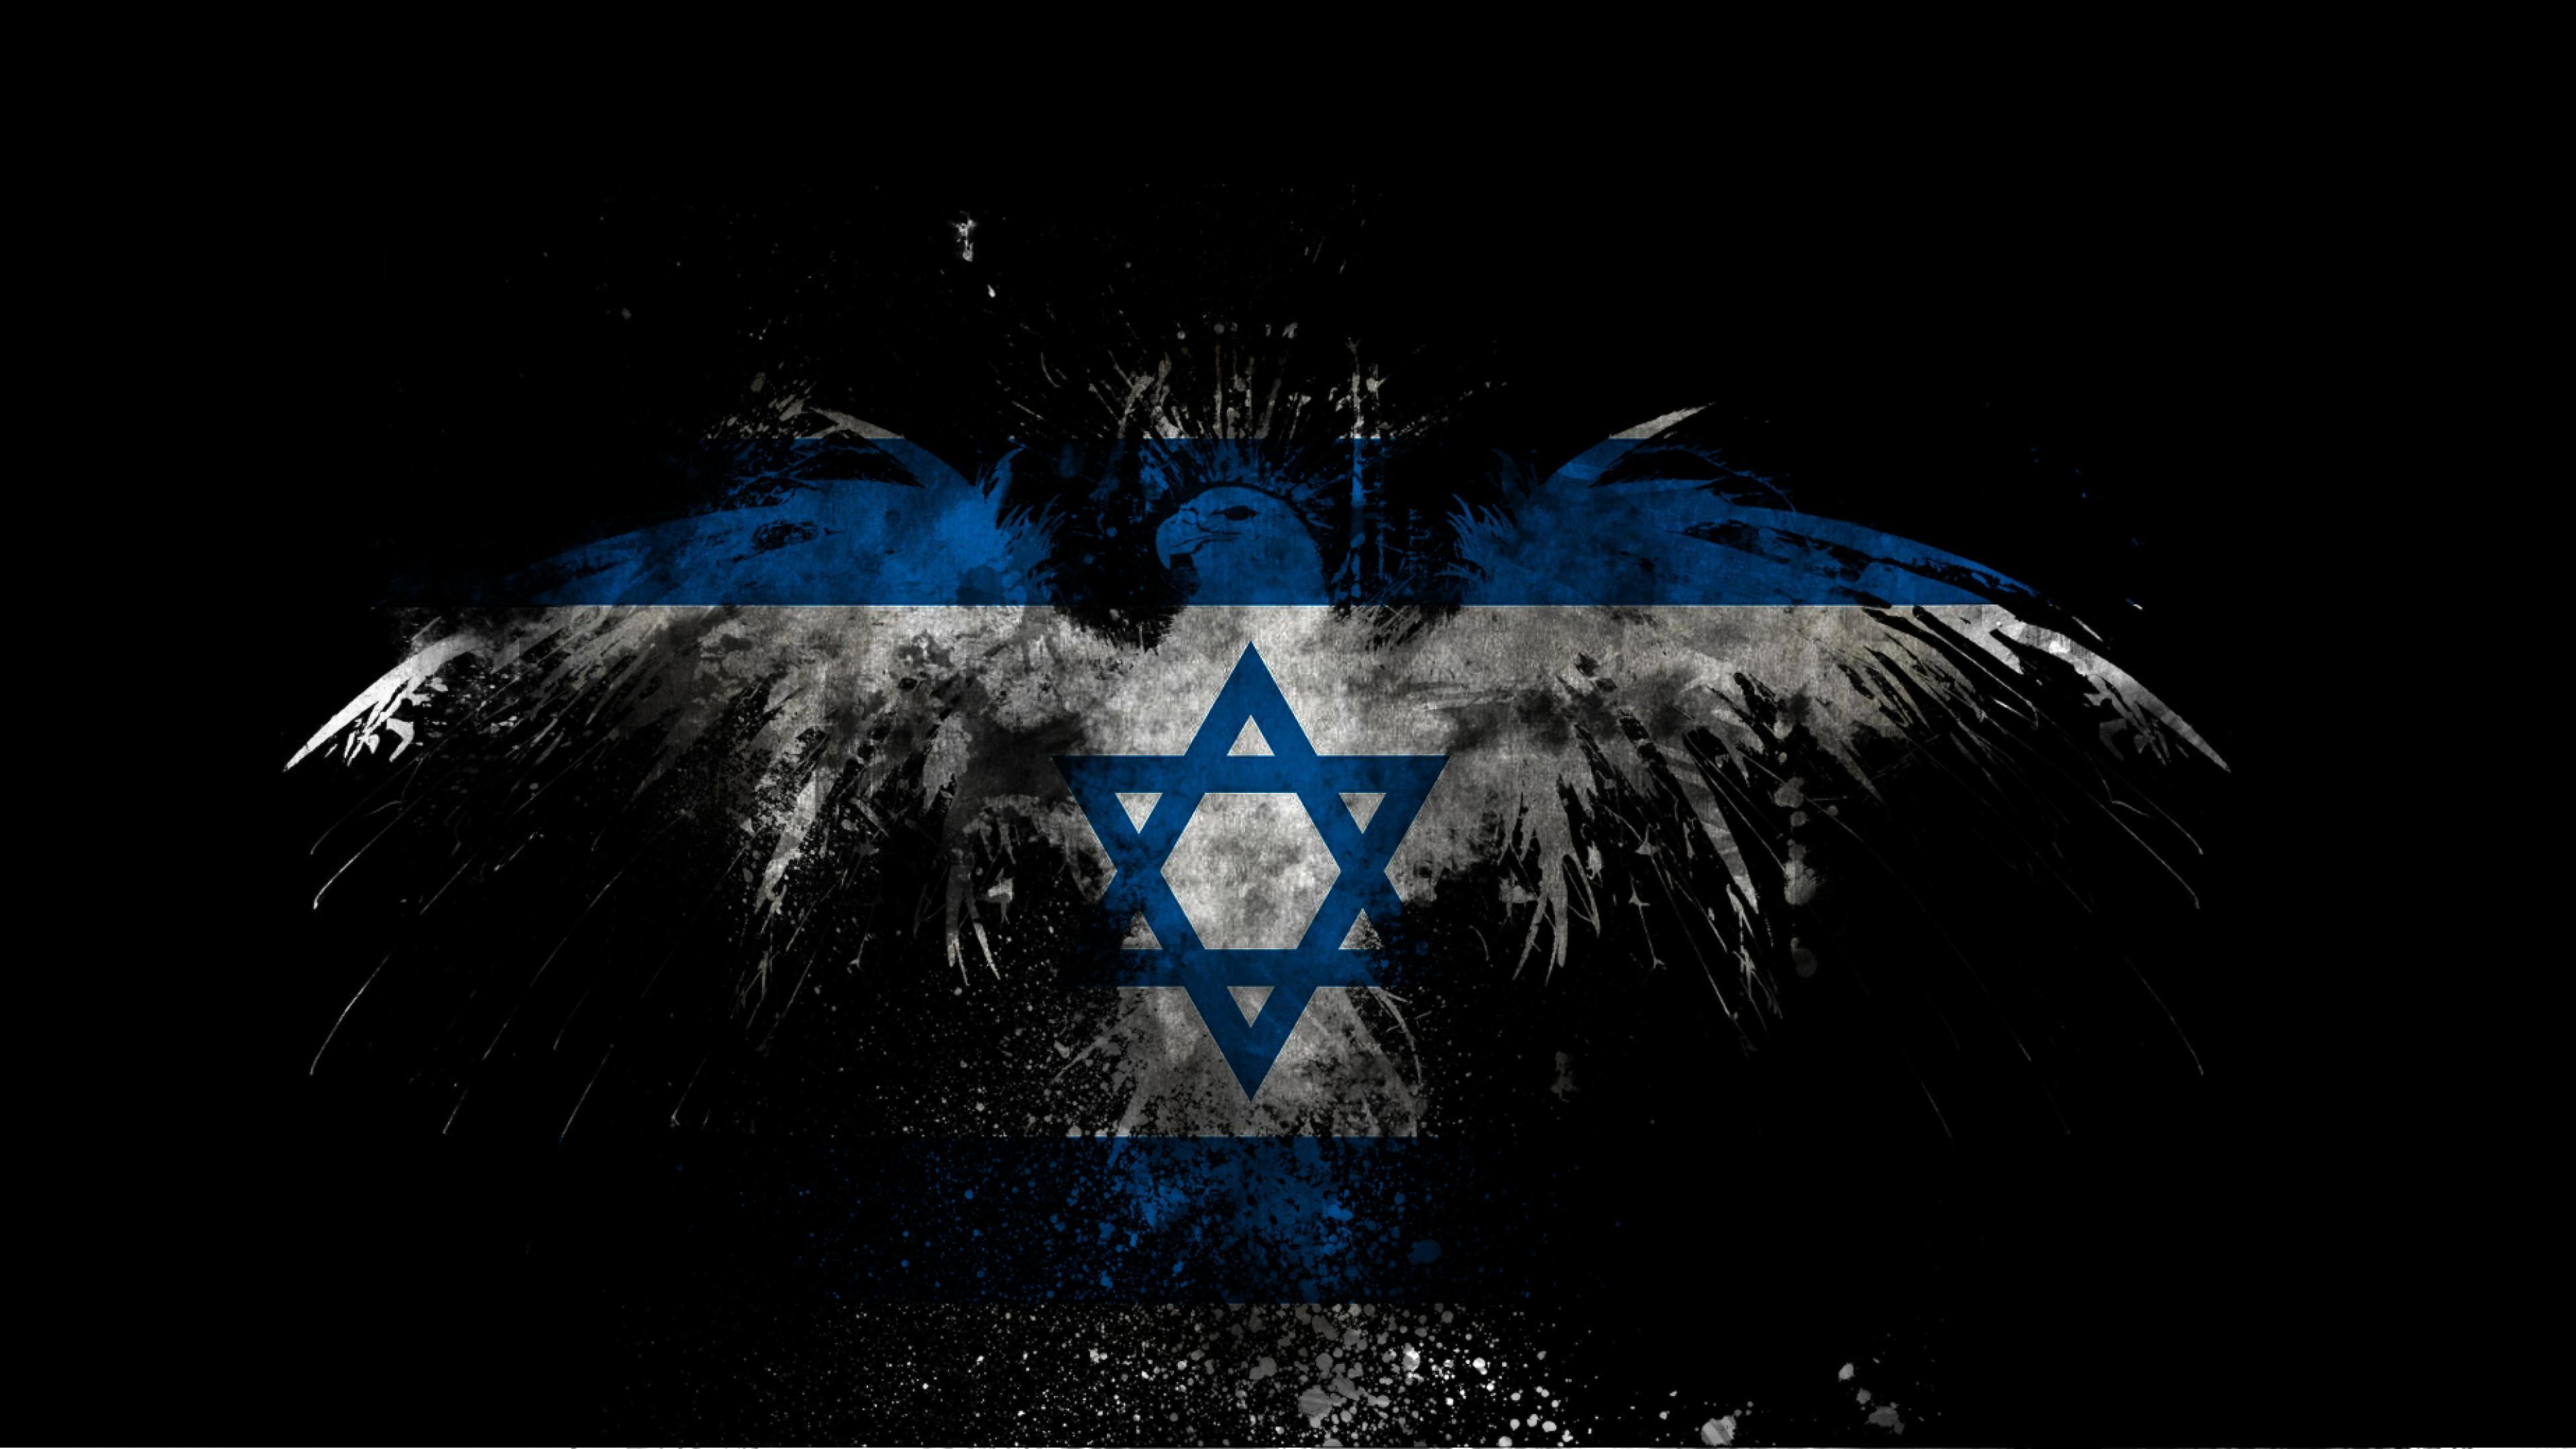 Israel Flag Wallpaper Top Background